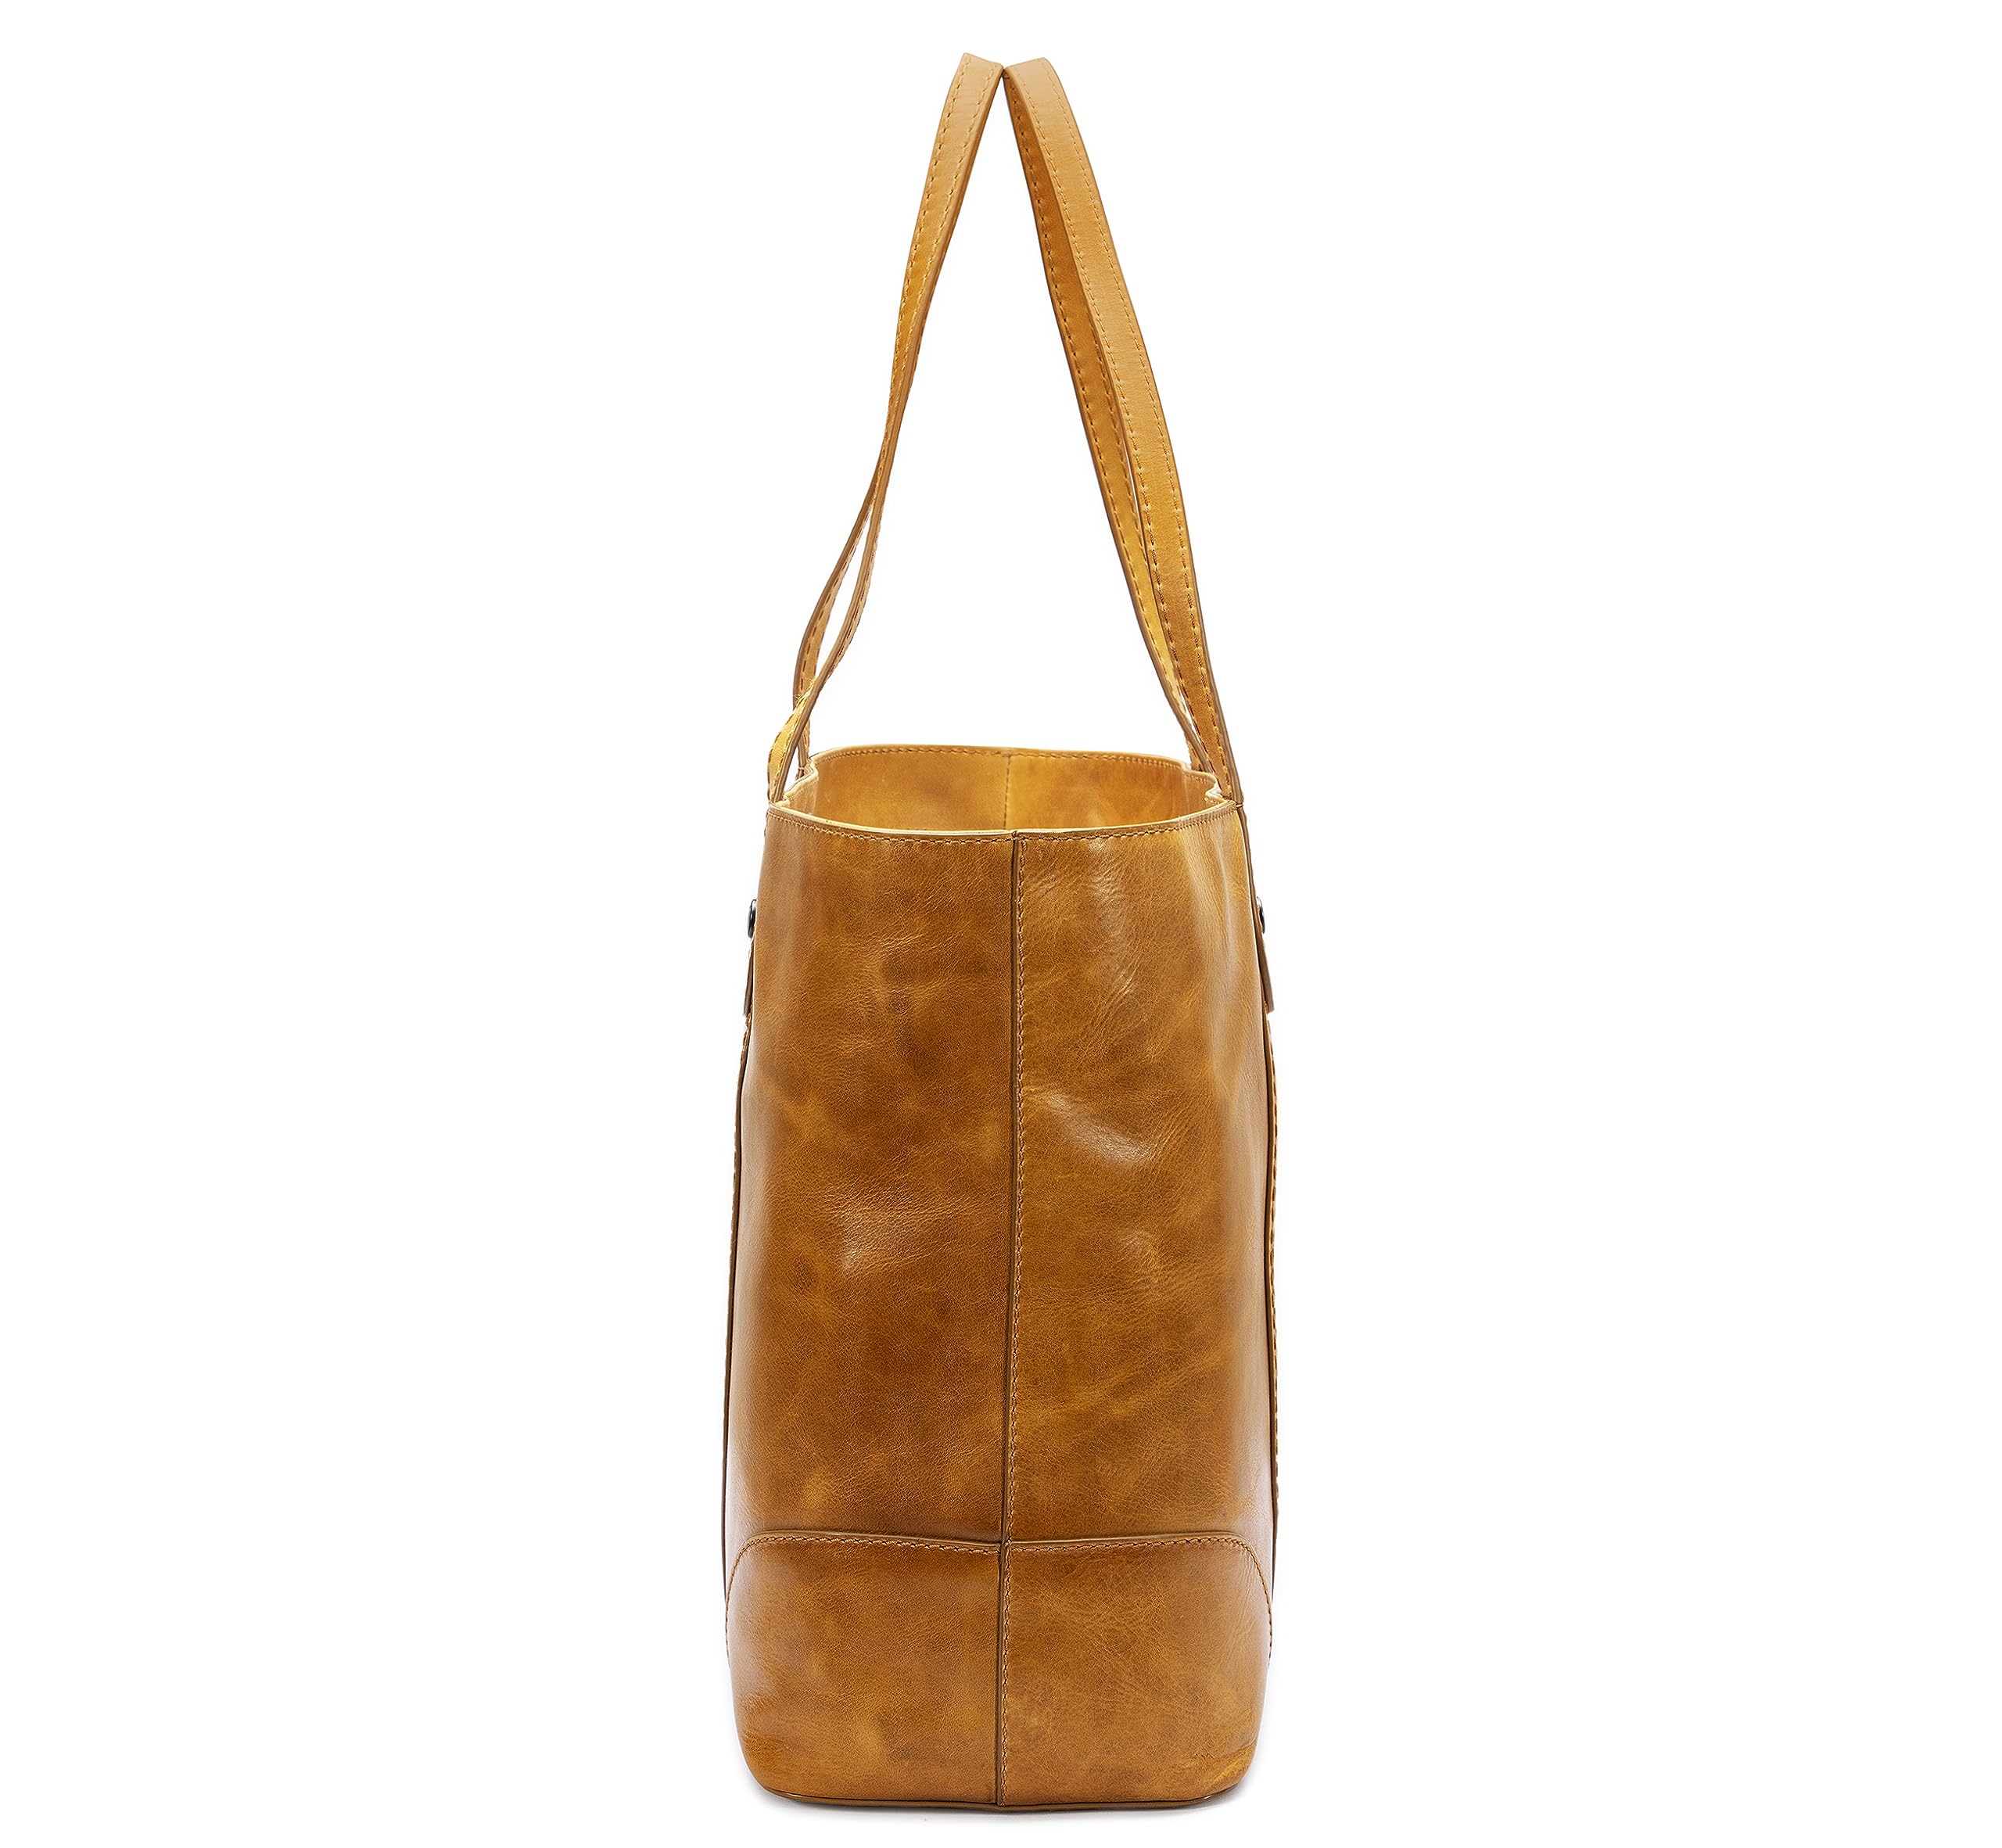 FRYE Melissa Shopper Leather Tote Bag